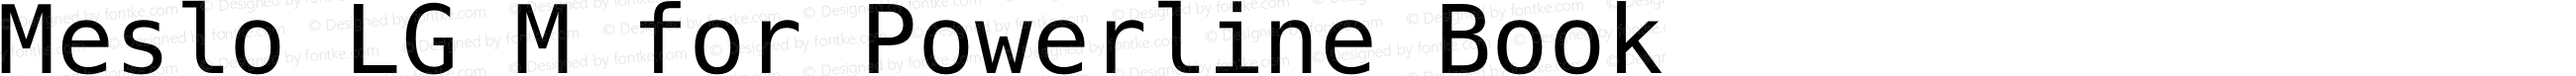 Meslo LG M Regular for Powerline Nerd Font Plus Font Awesome Mono Windows Compatible